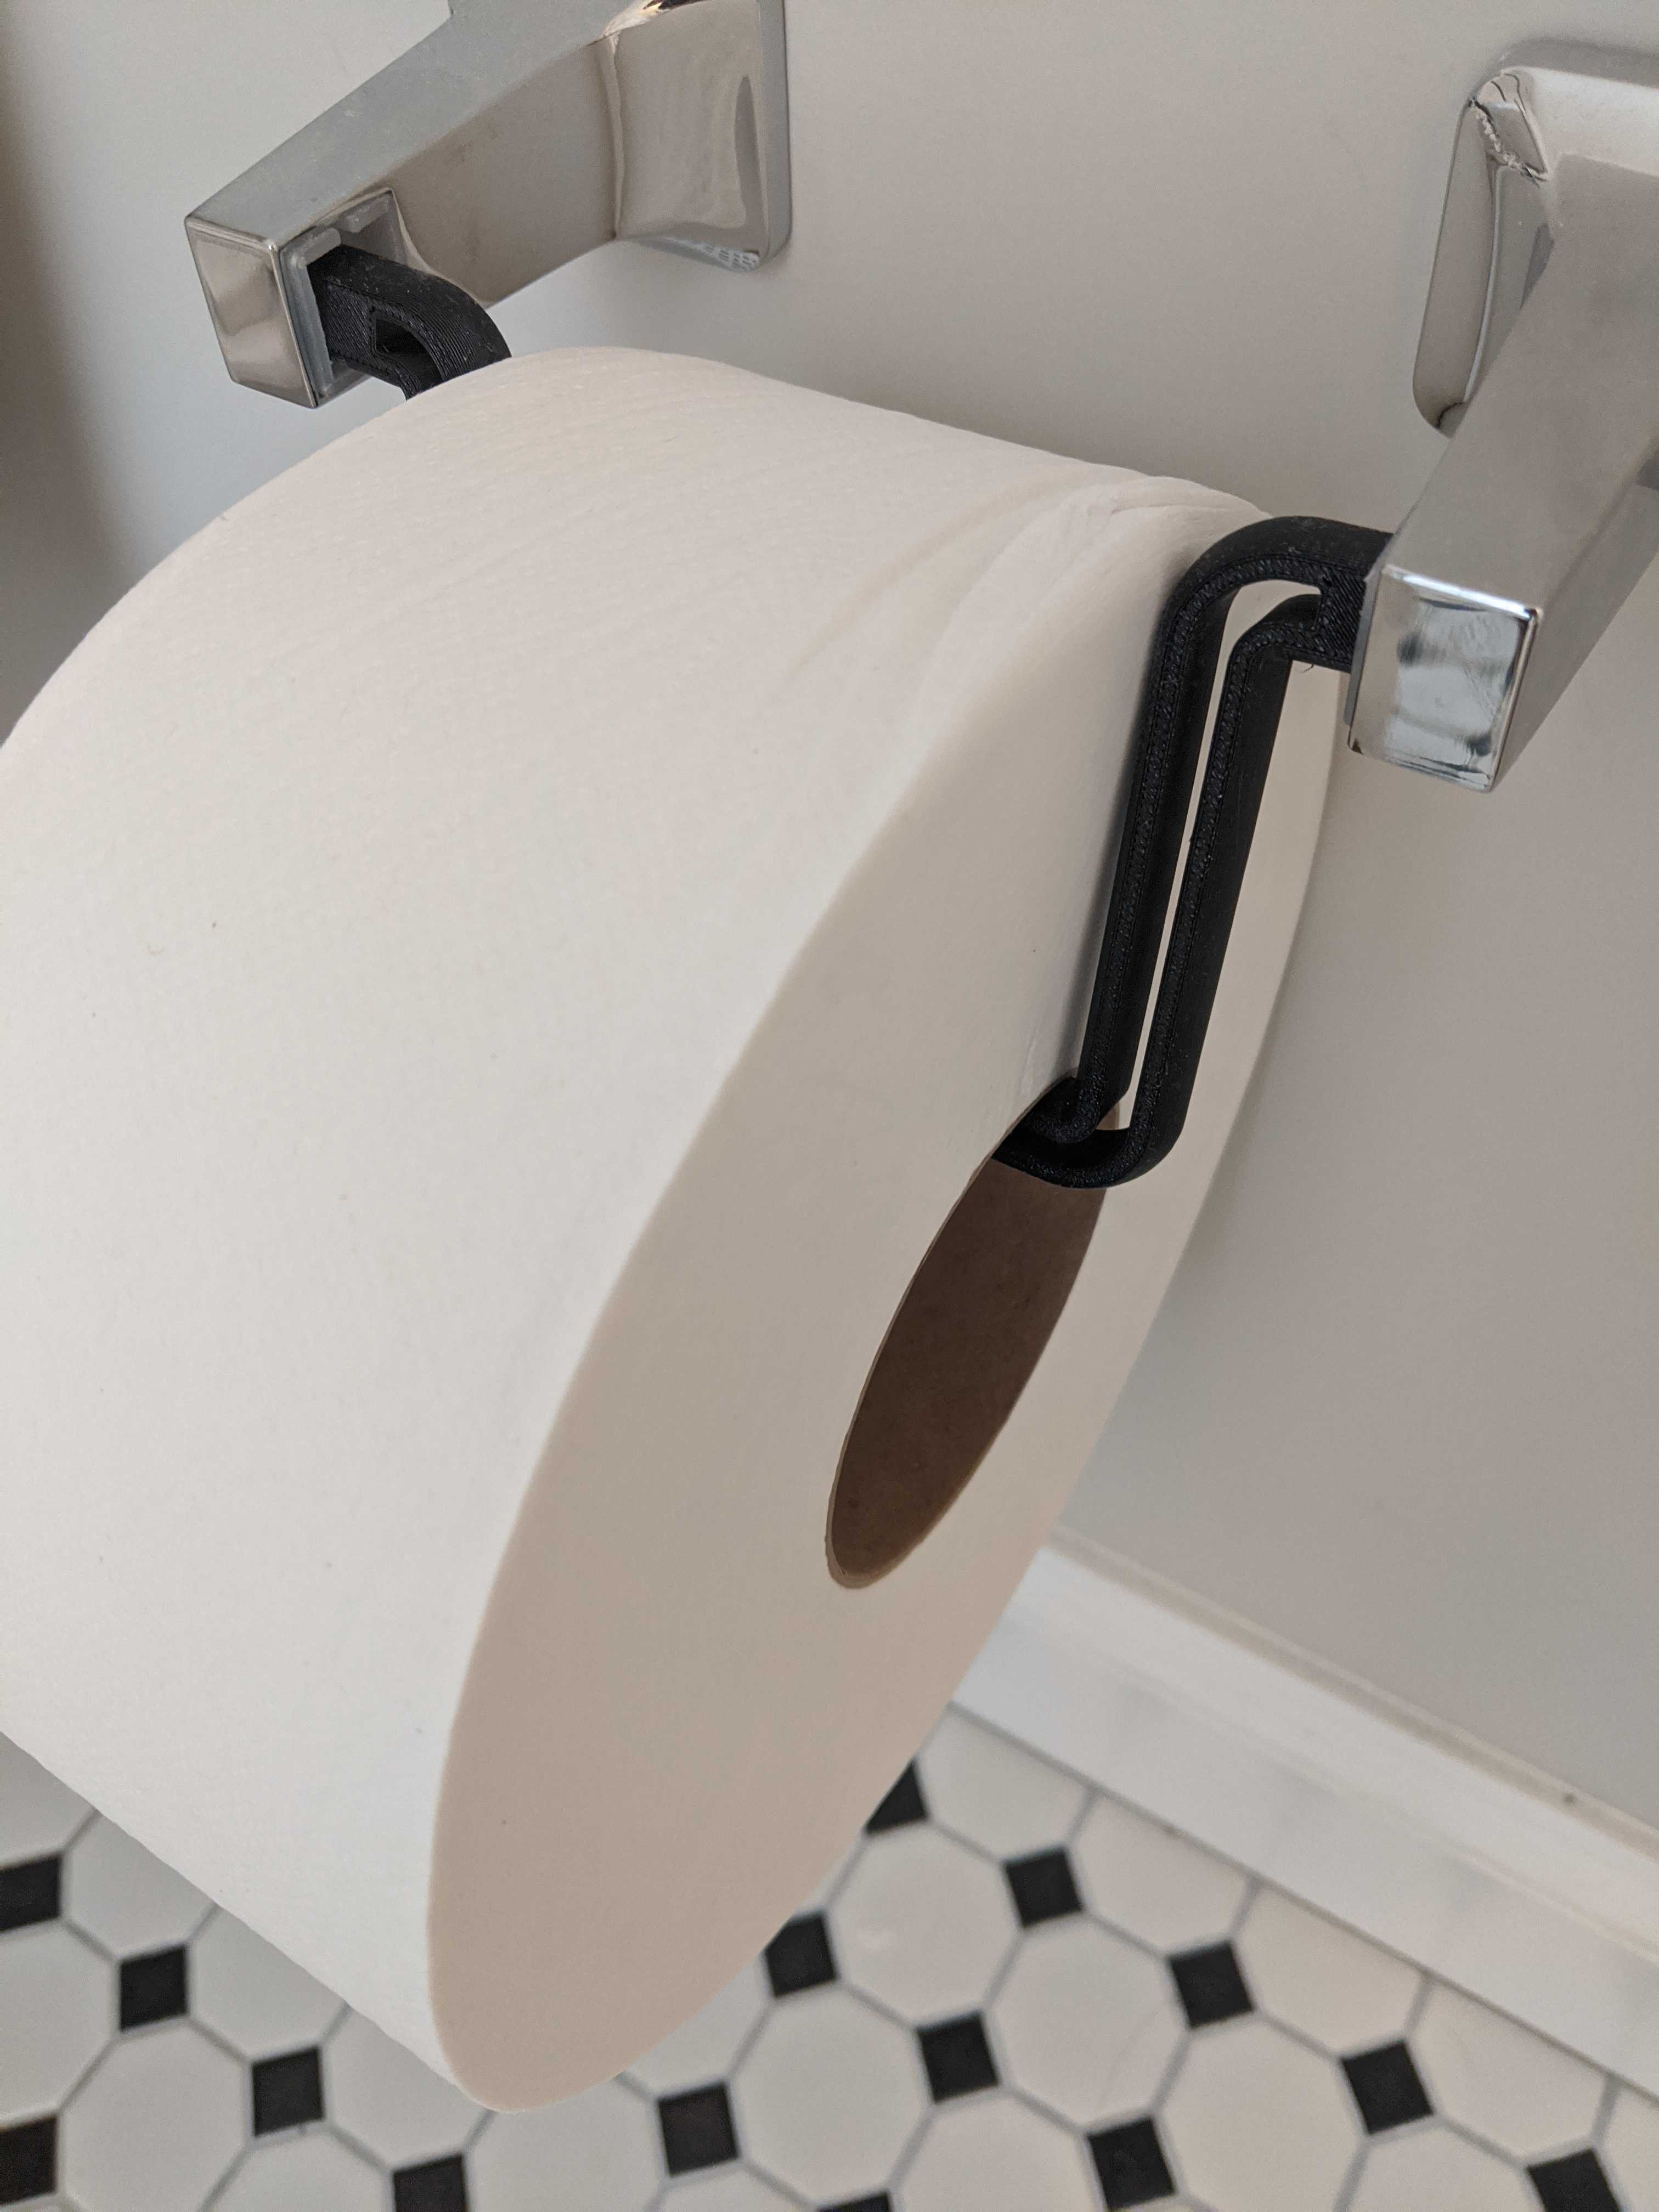 Toilet Paper Adapter